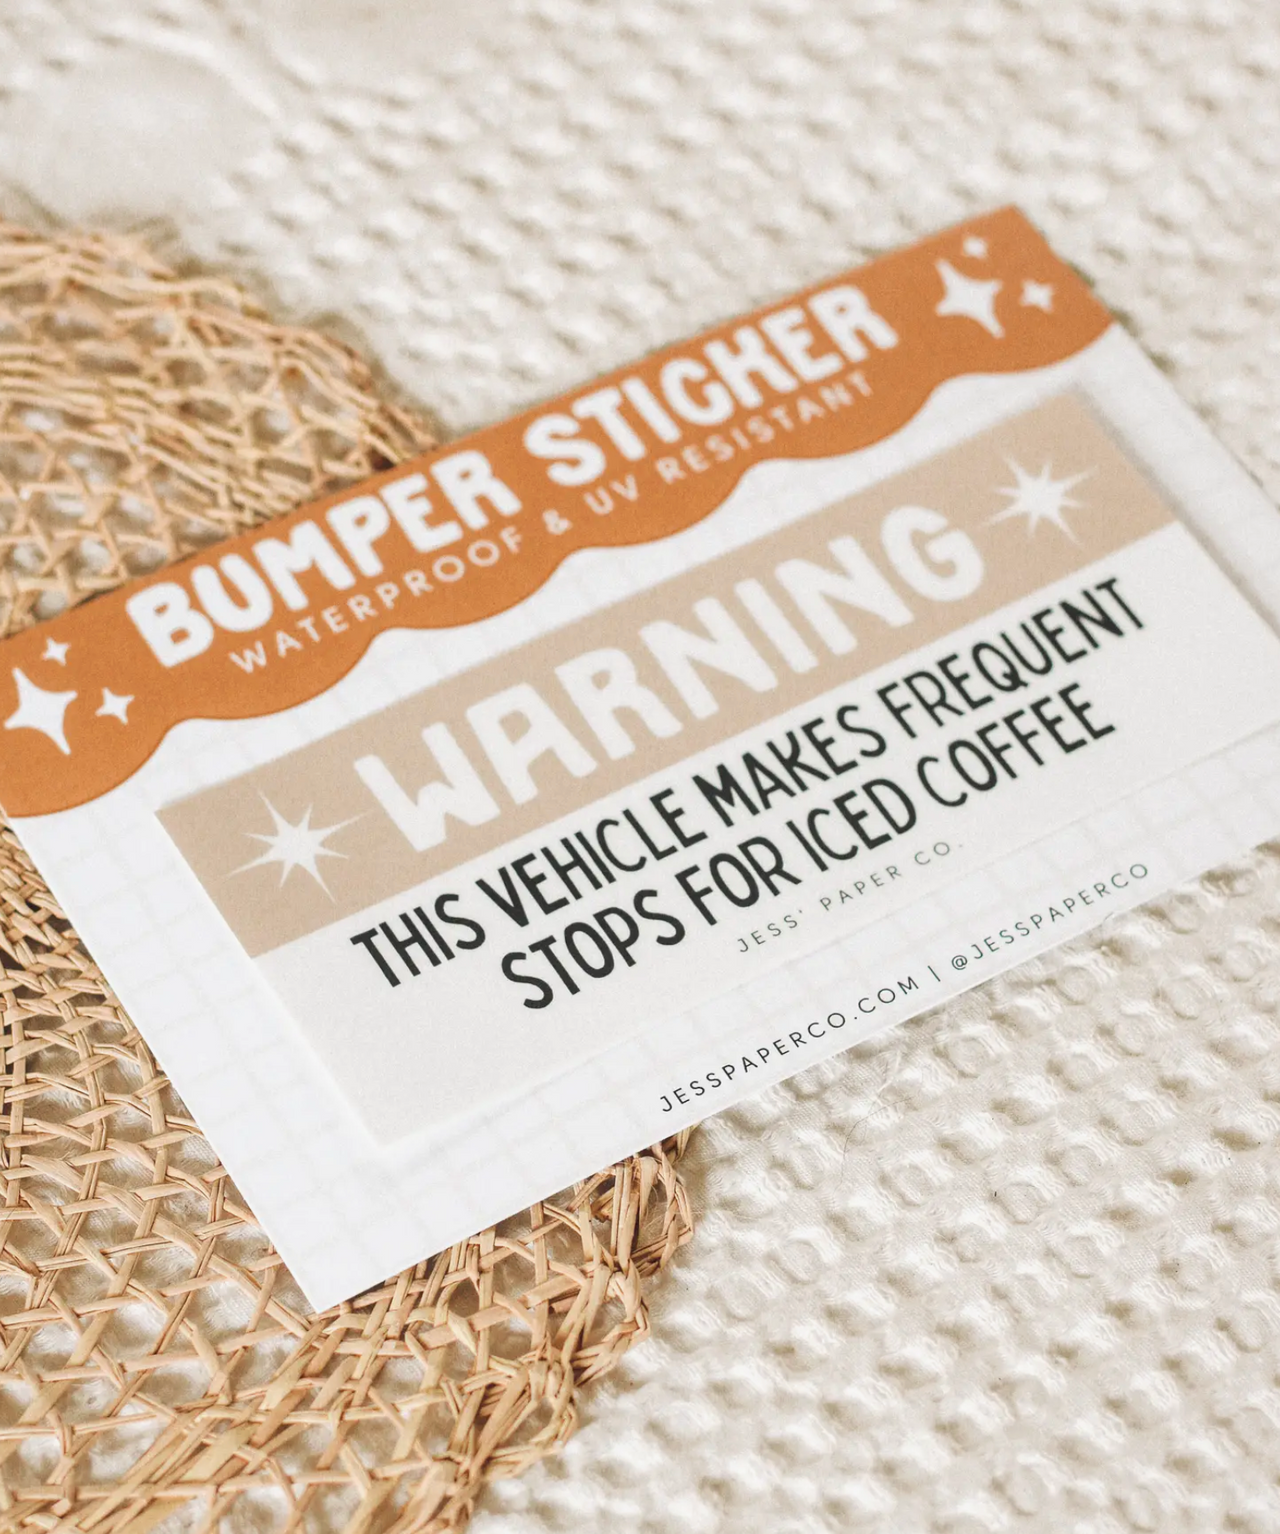 Iced Coffee Bumper Sticker